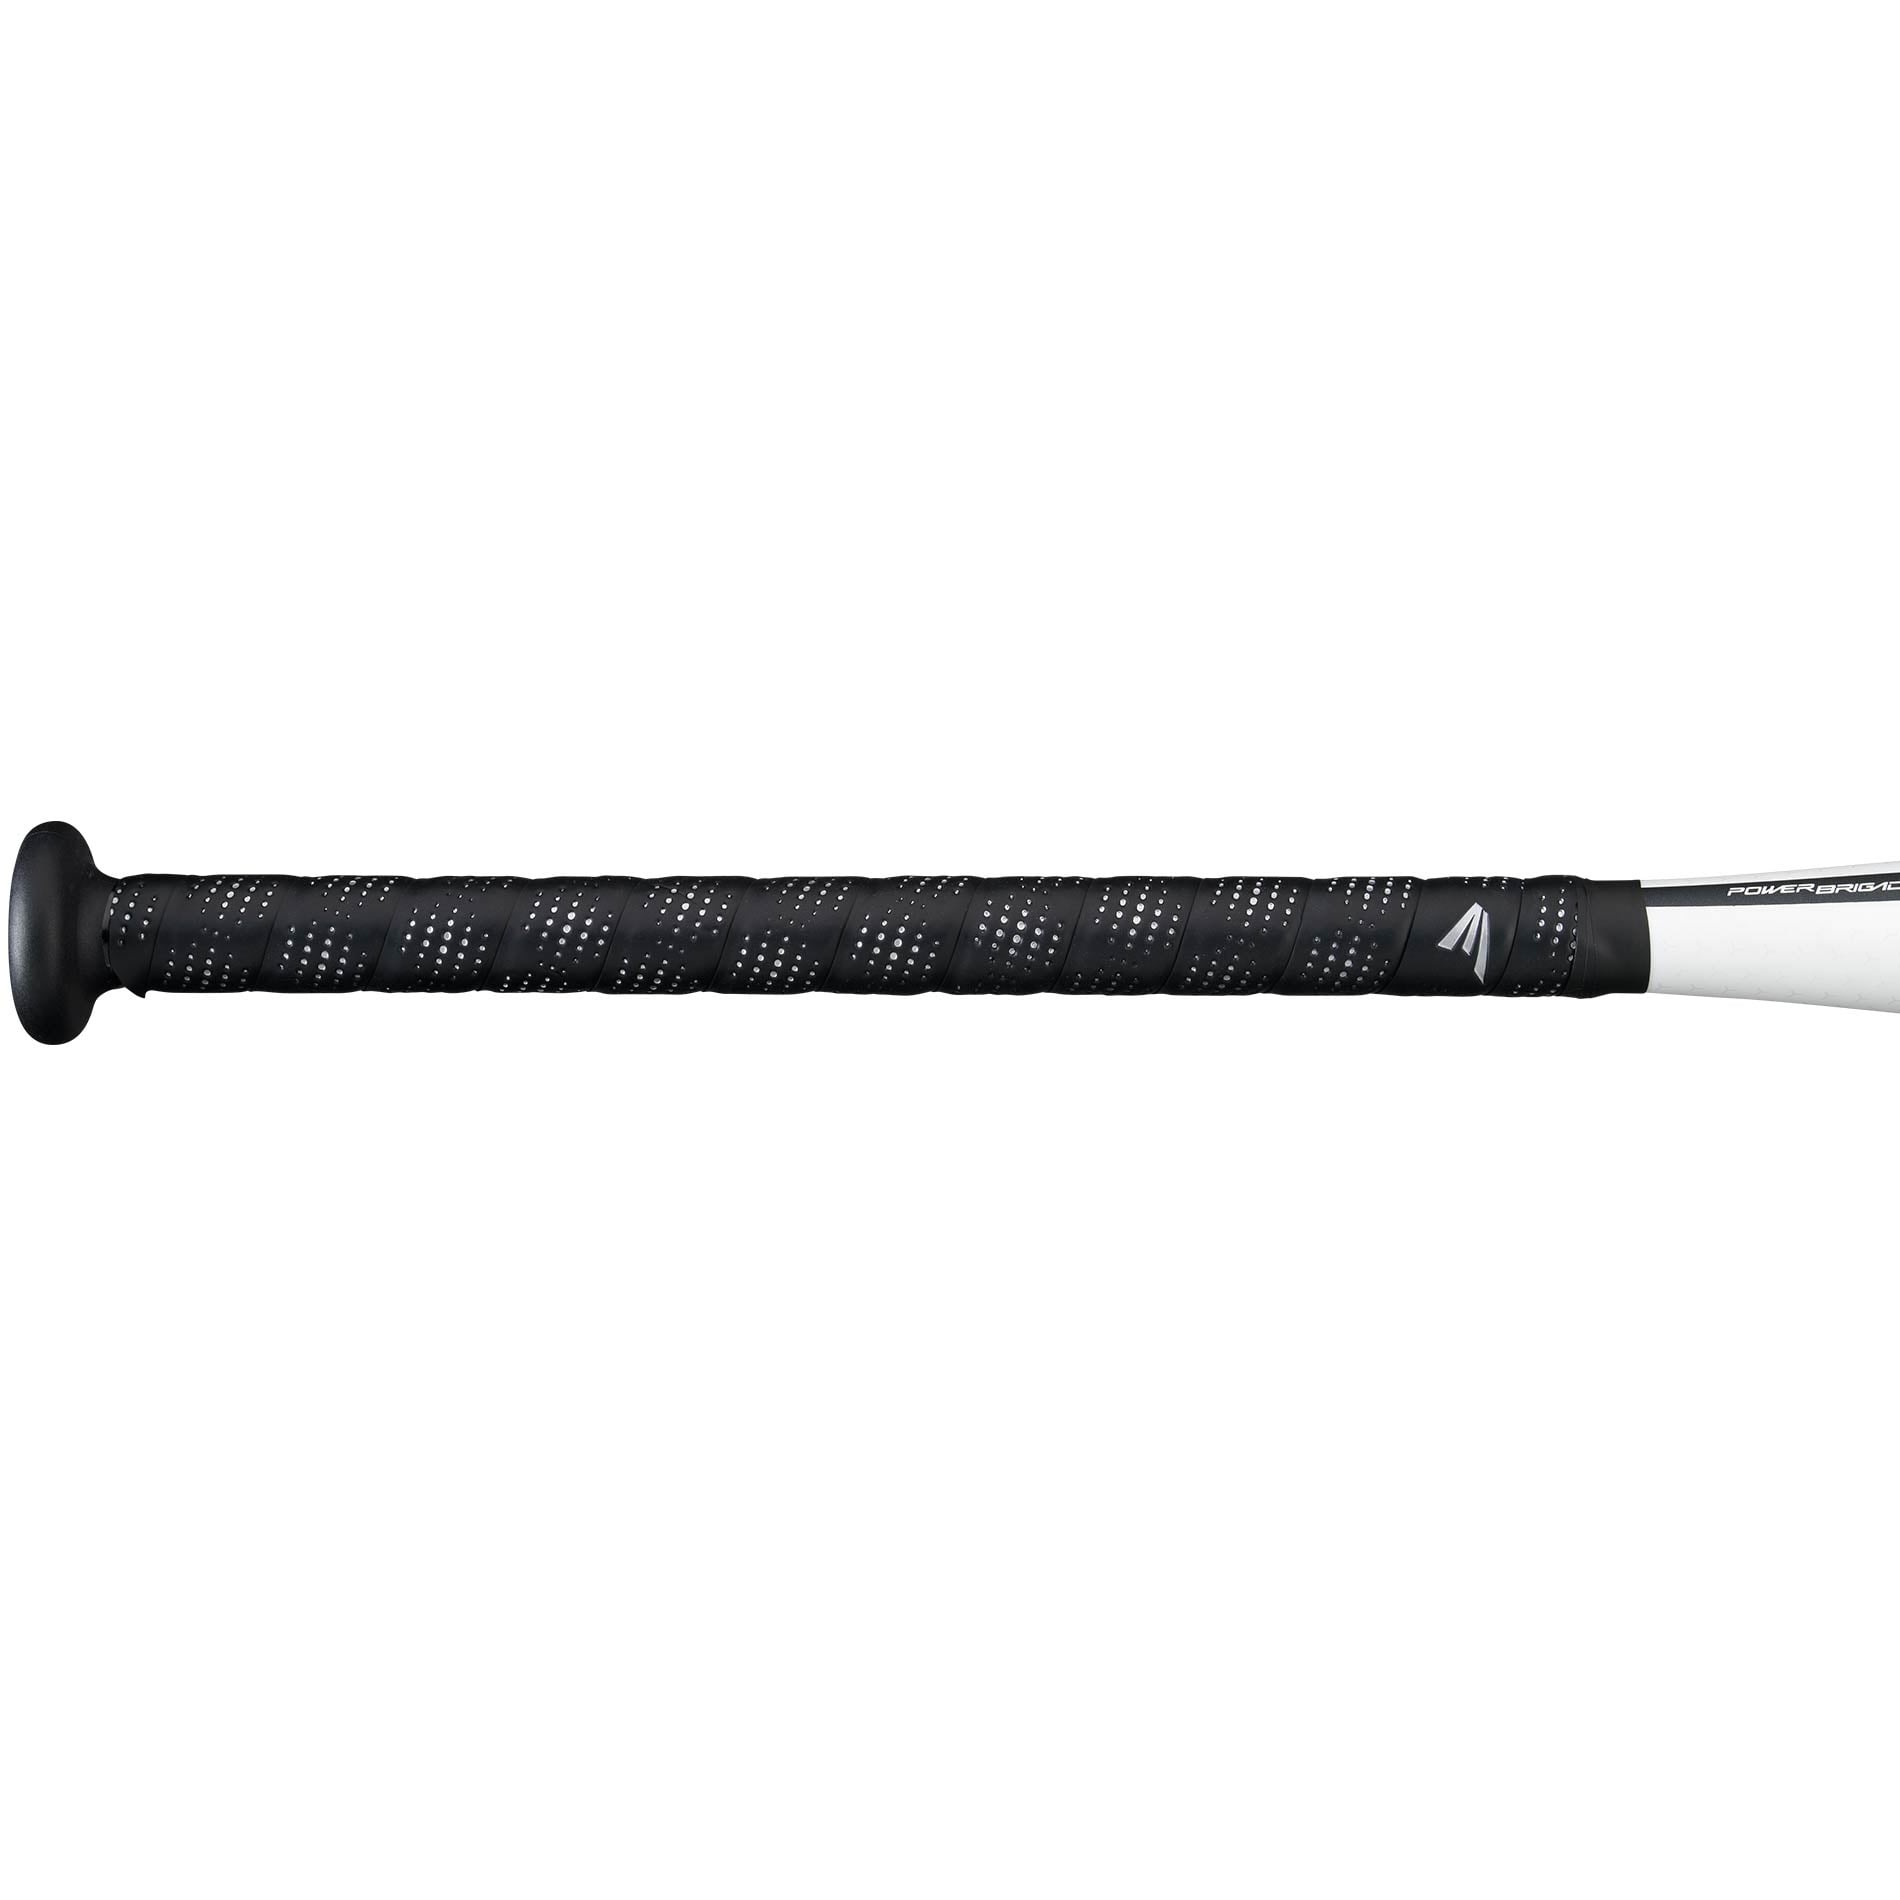 Ultra-Tacky Grip Reduce Vibration Easton 1.2mm Hyperskin™ BaseCamo Bat Grip 